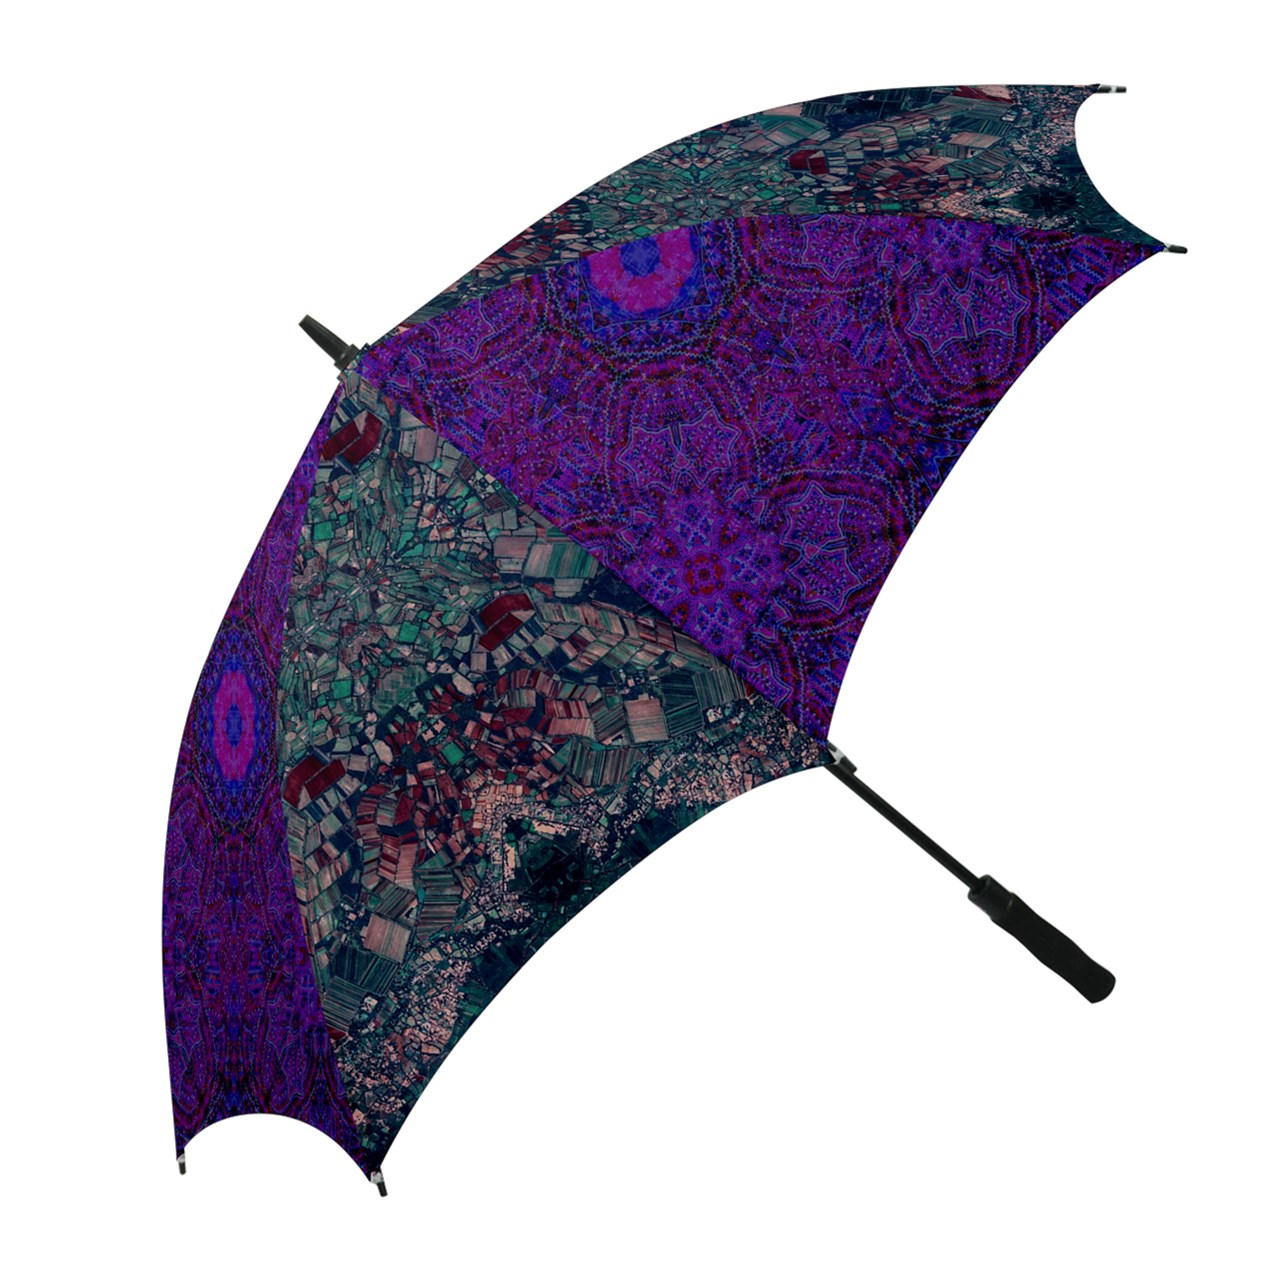 Bacanda Festival XL 51 Inch Umbrella / Parasol